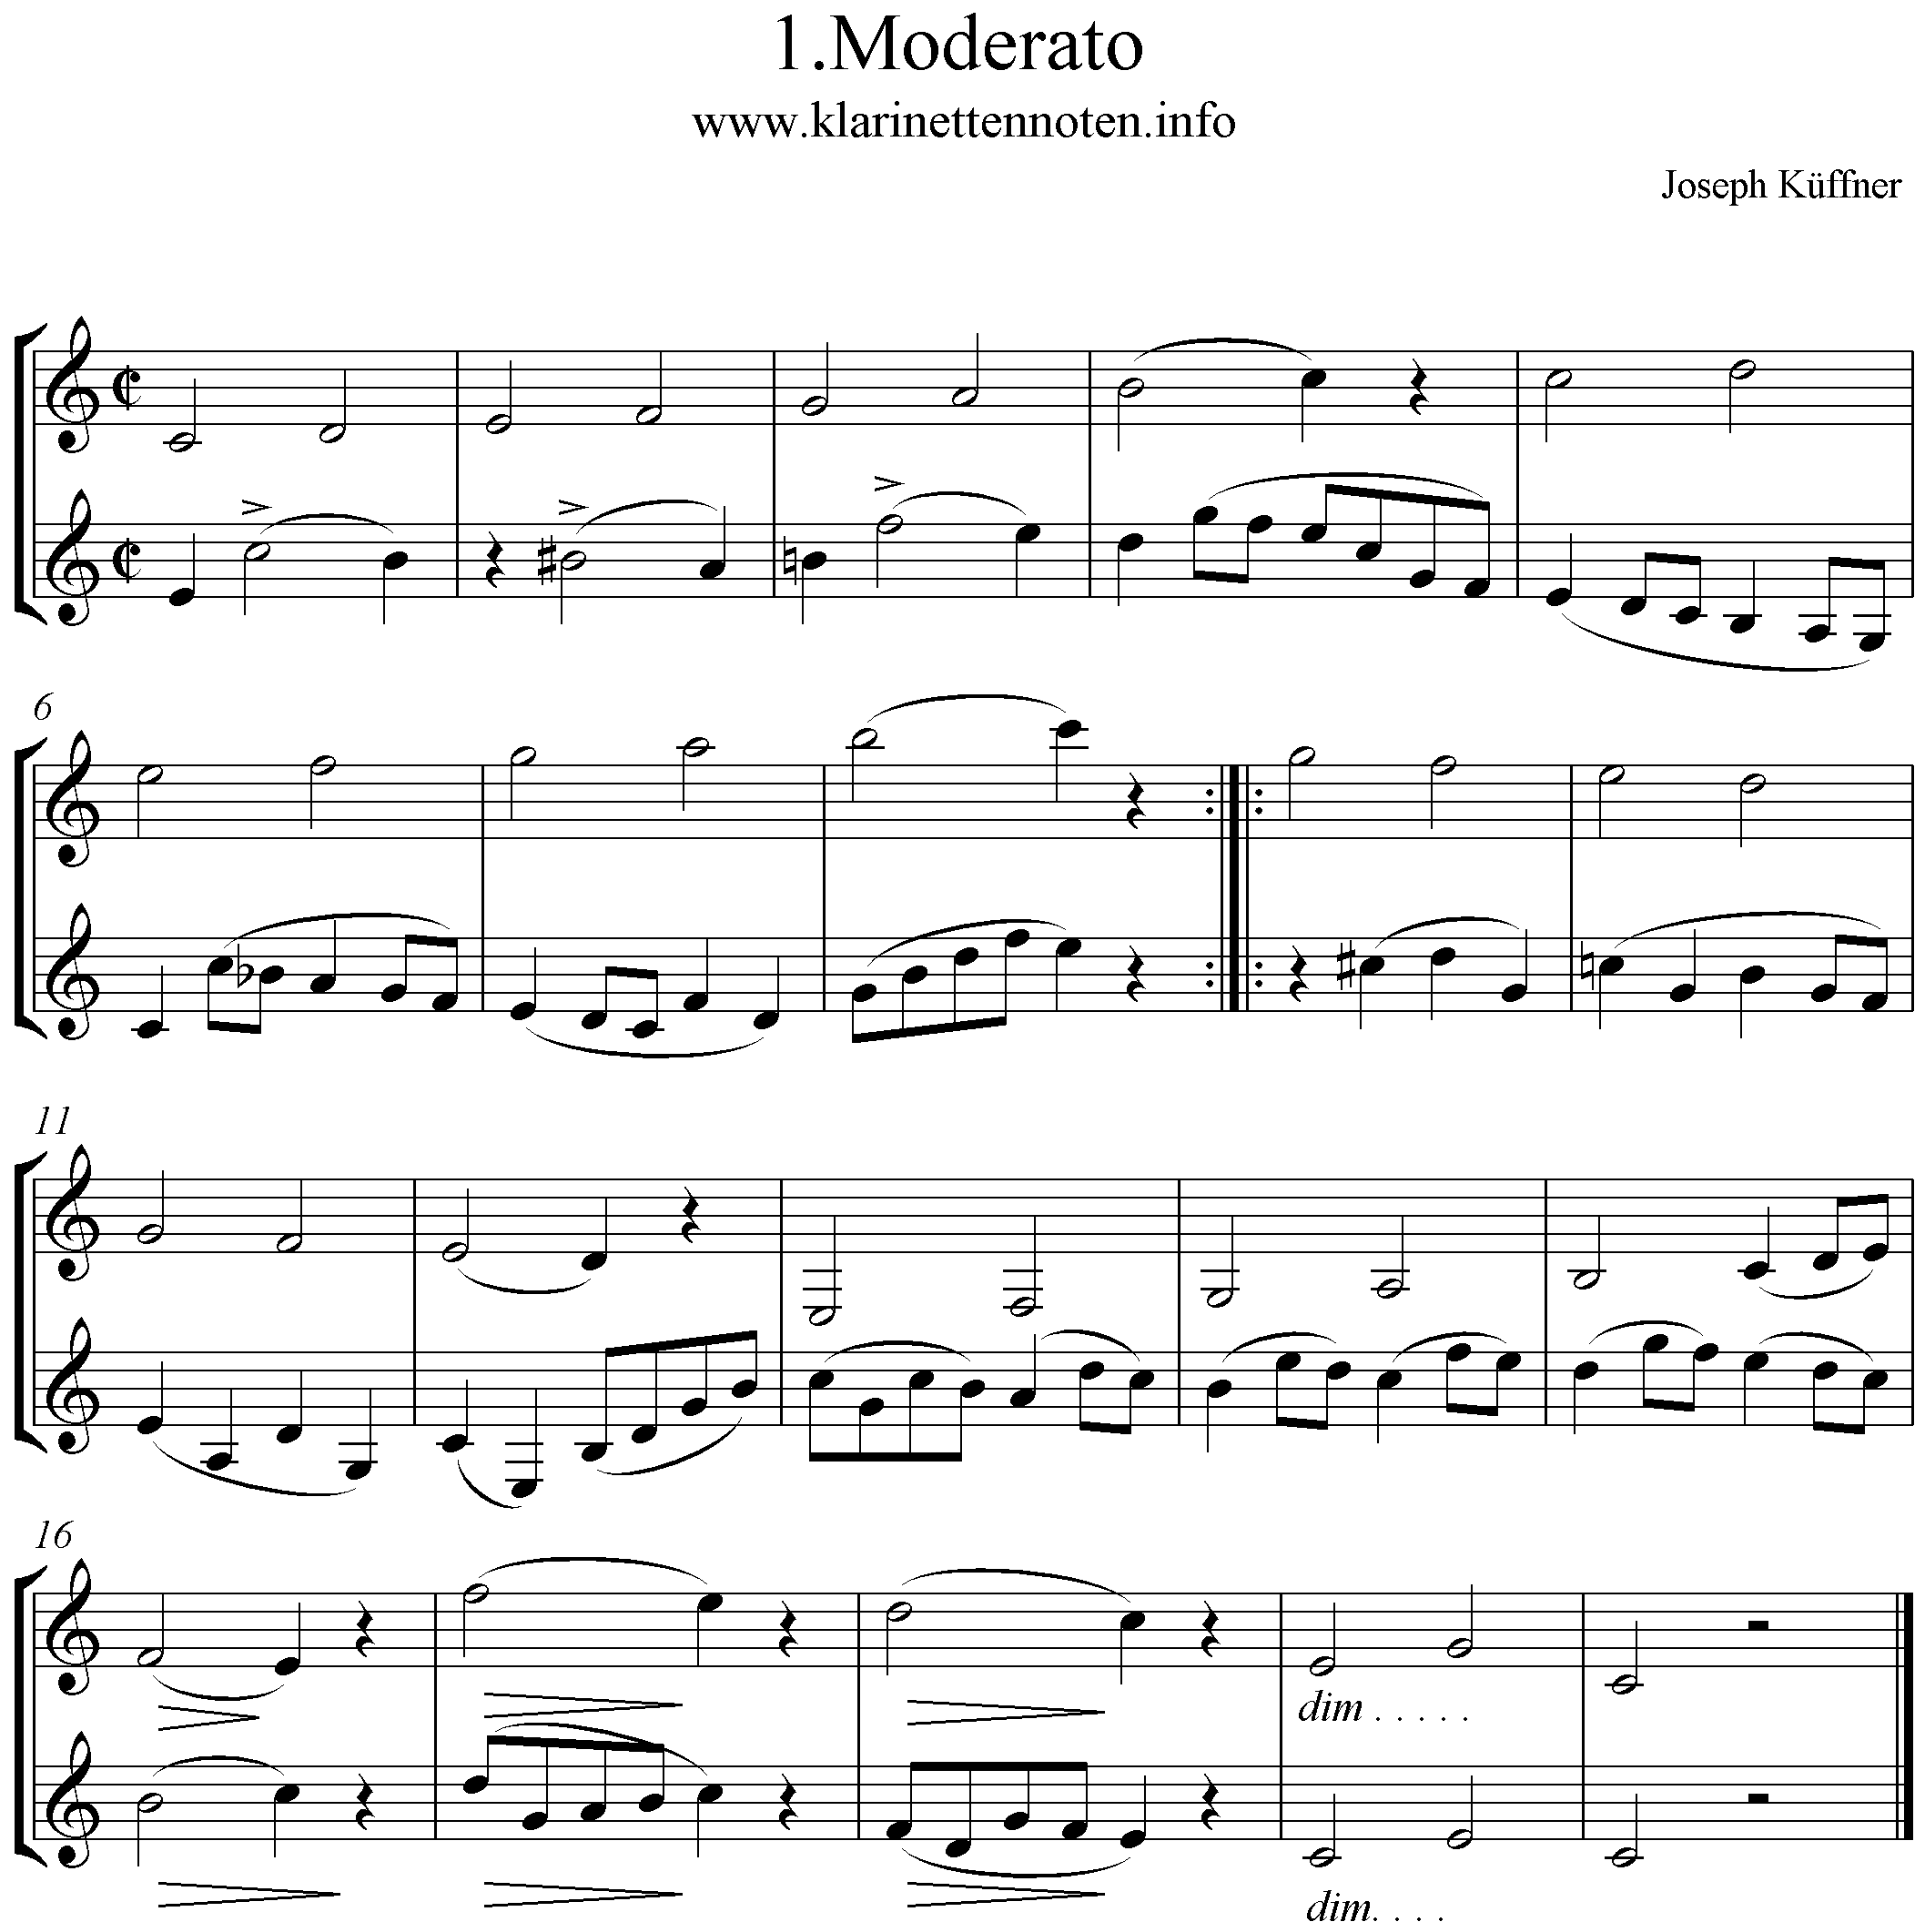 Küffner 24 instruktive Duette -1 Moderato